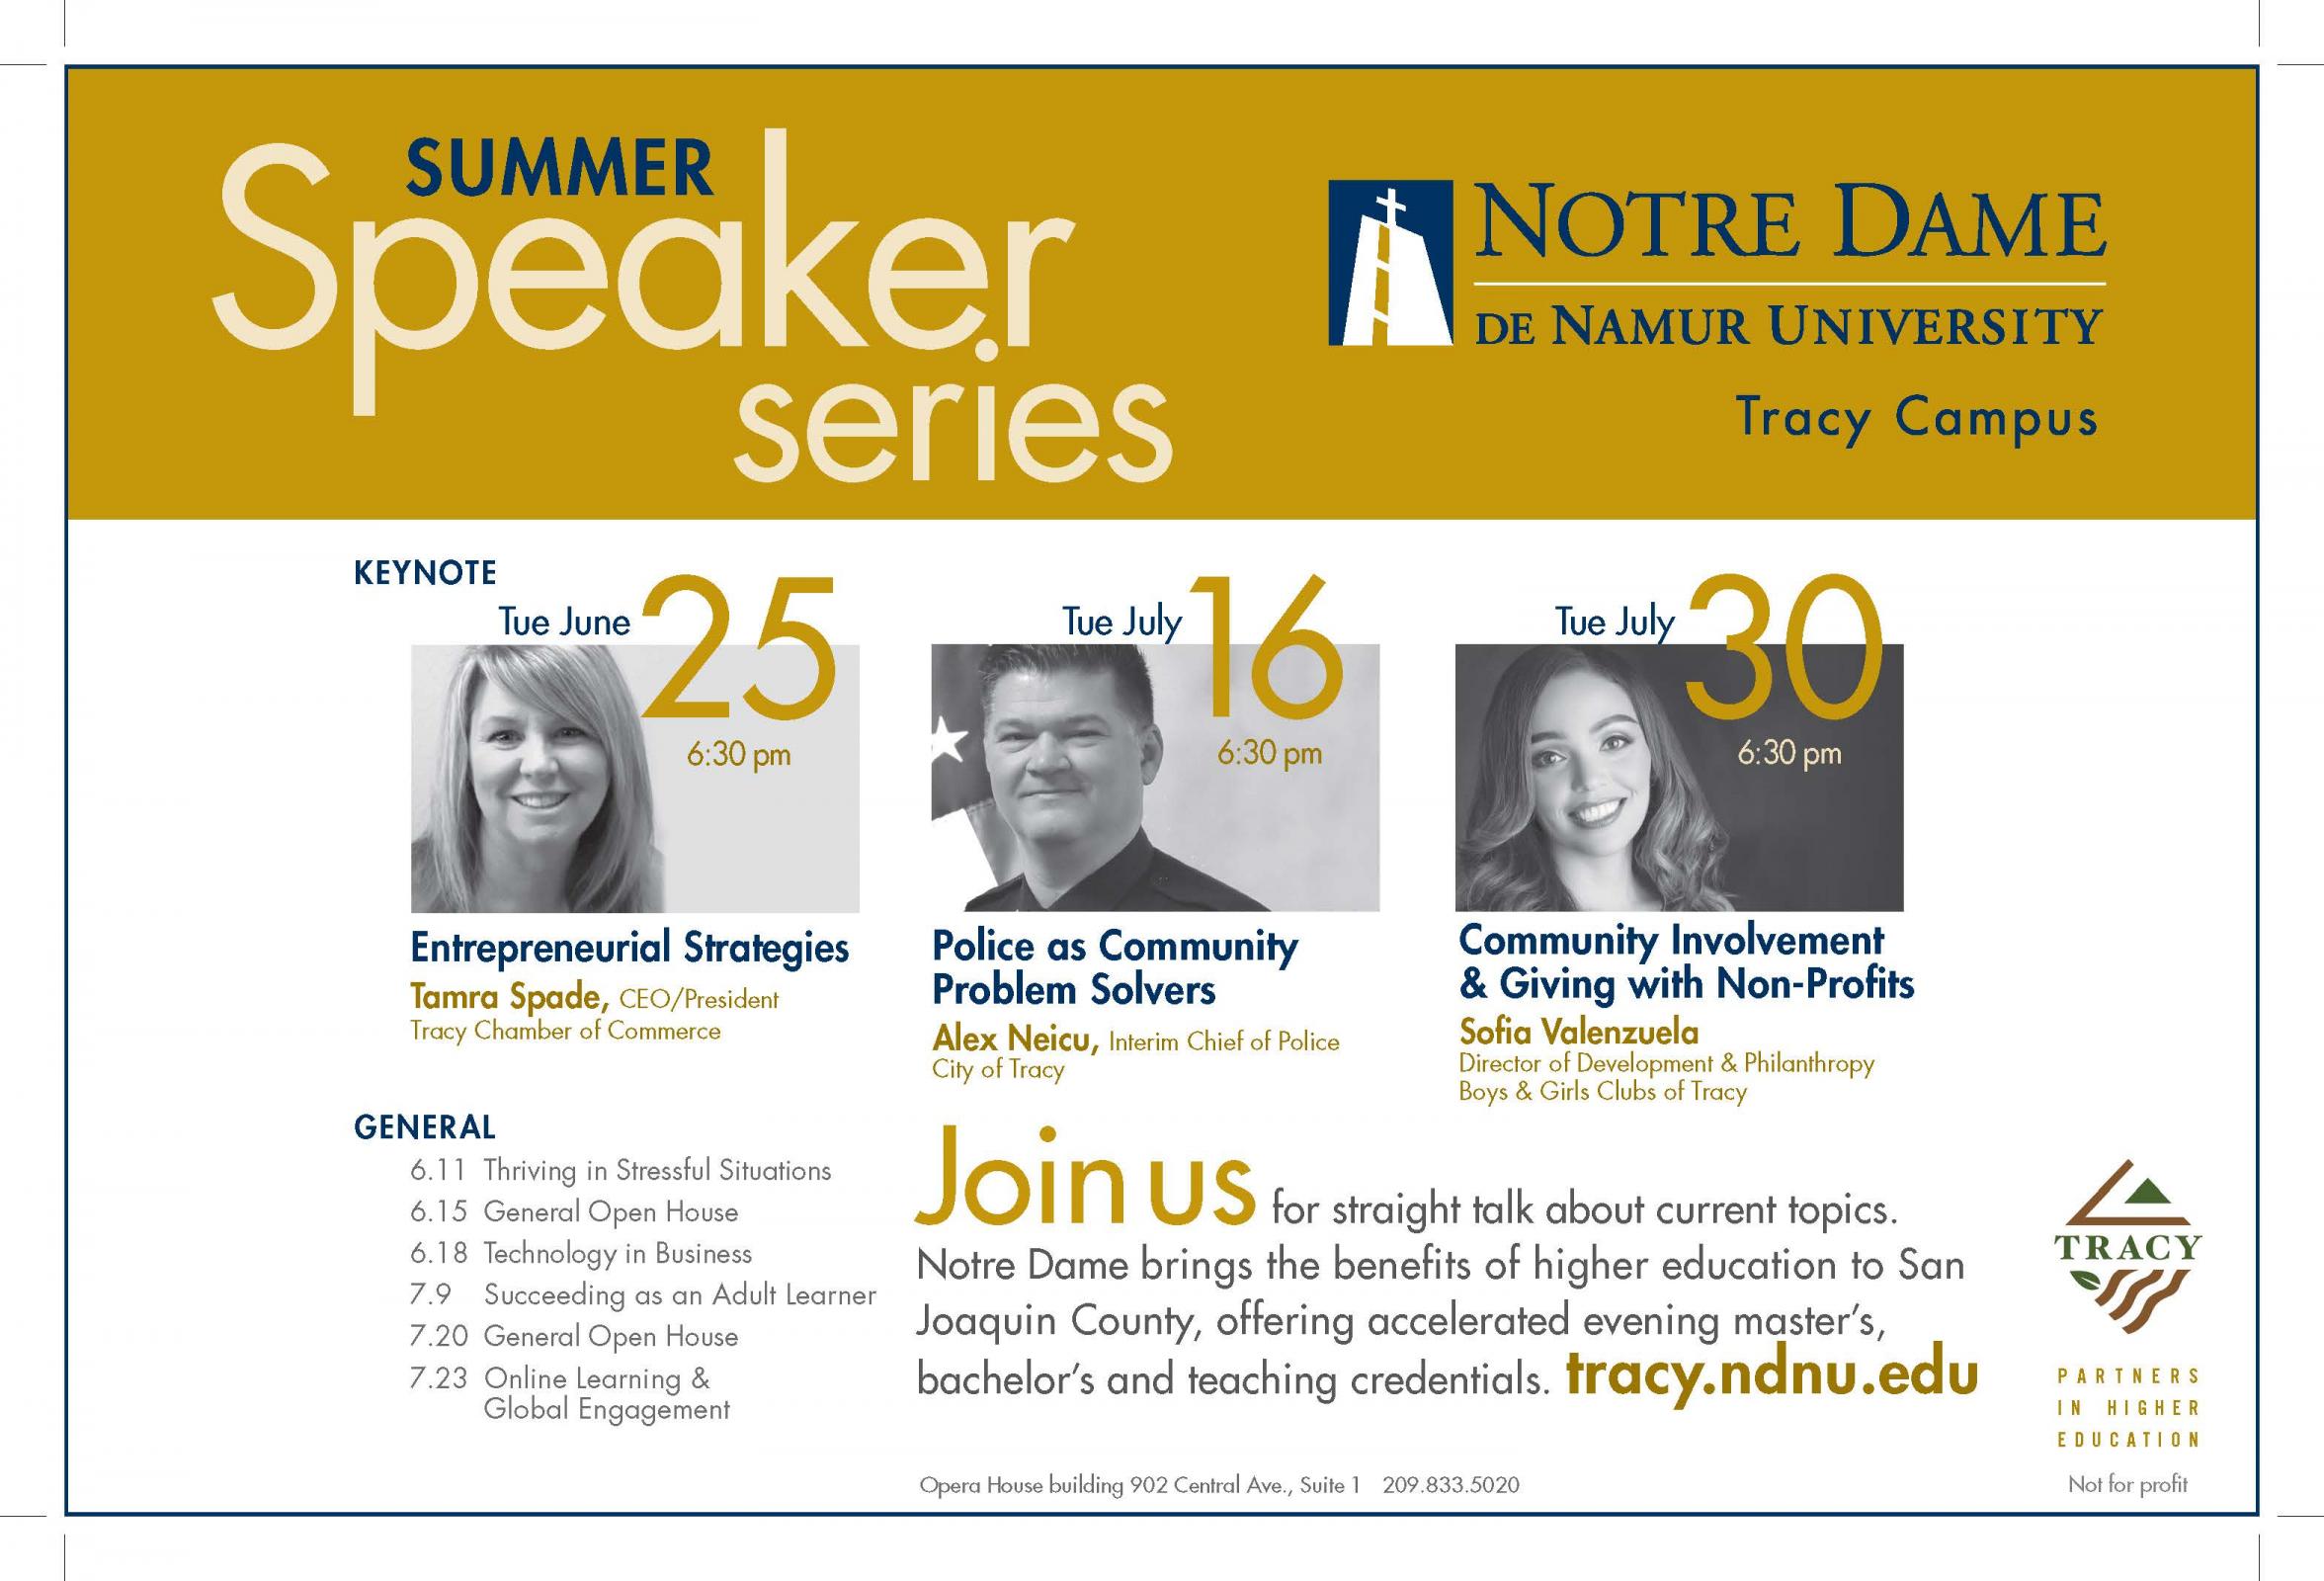 NDNU Summer Speaker Series events